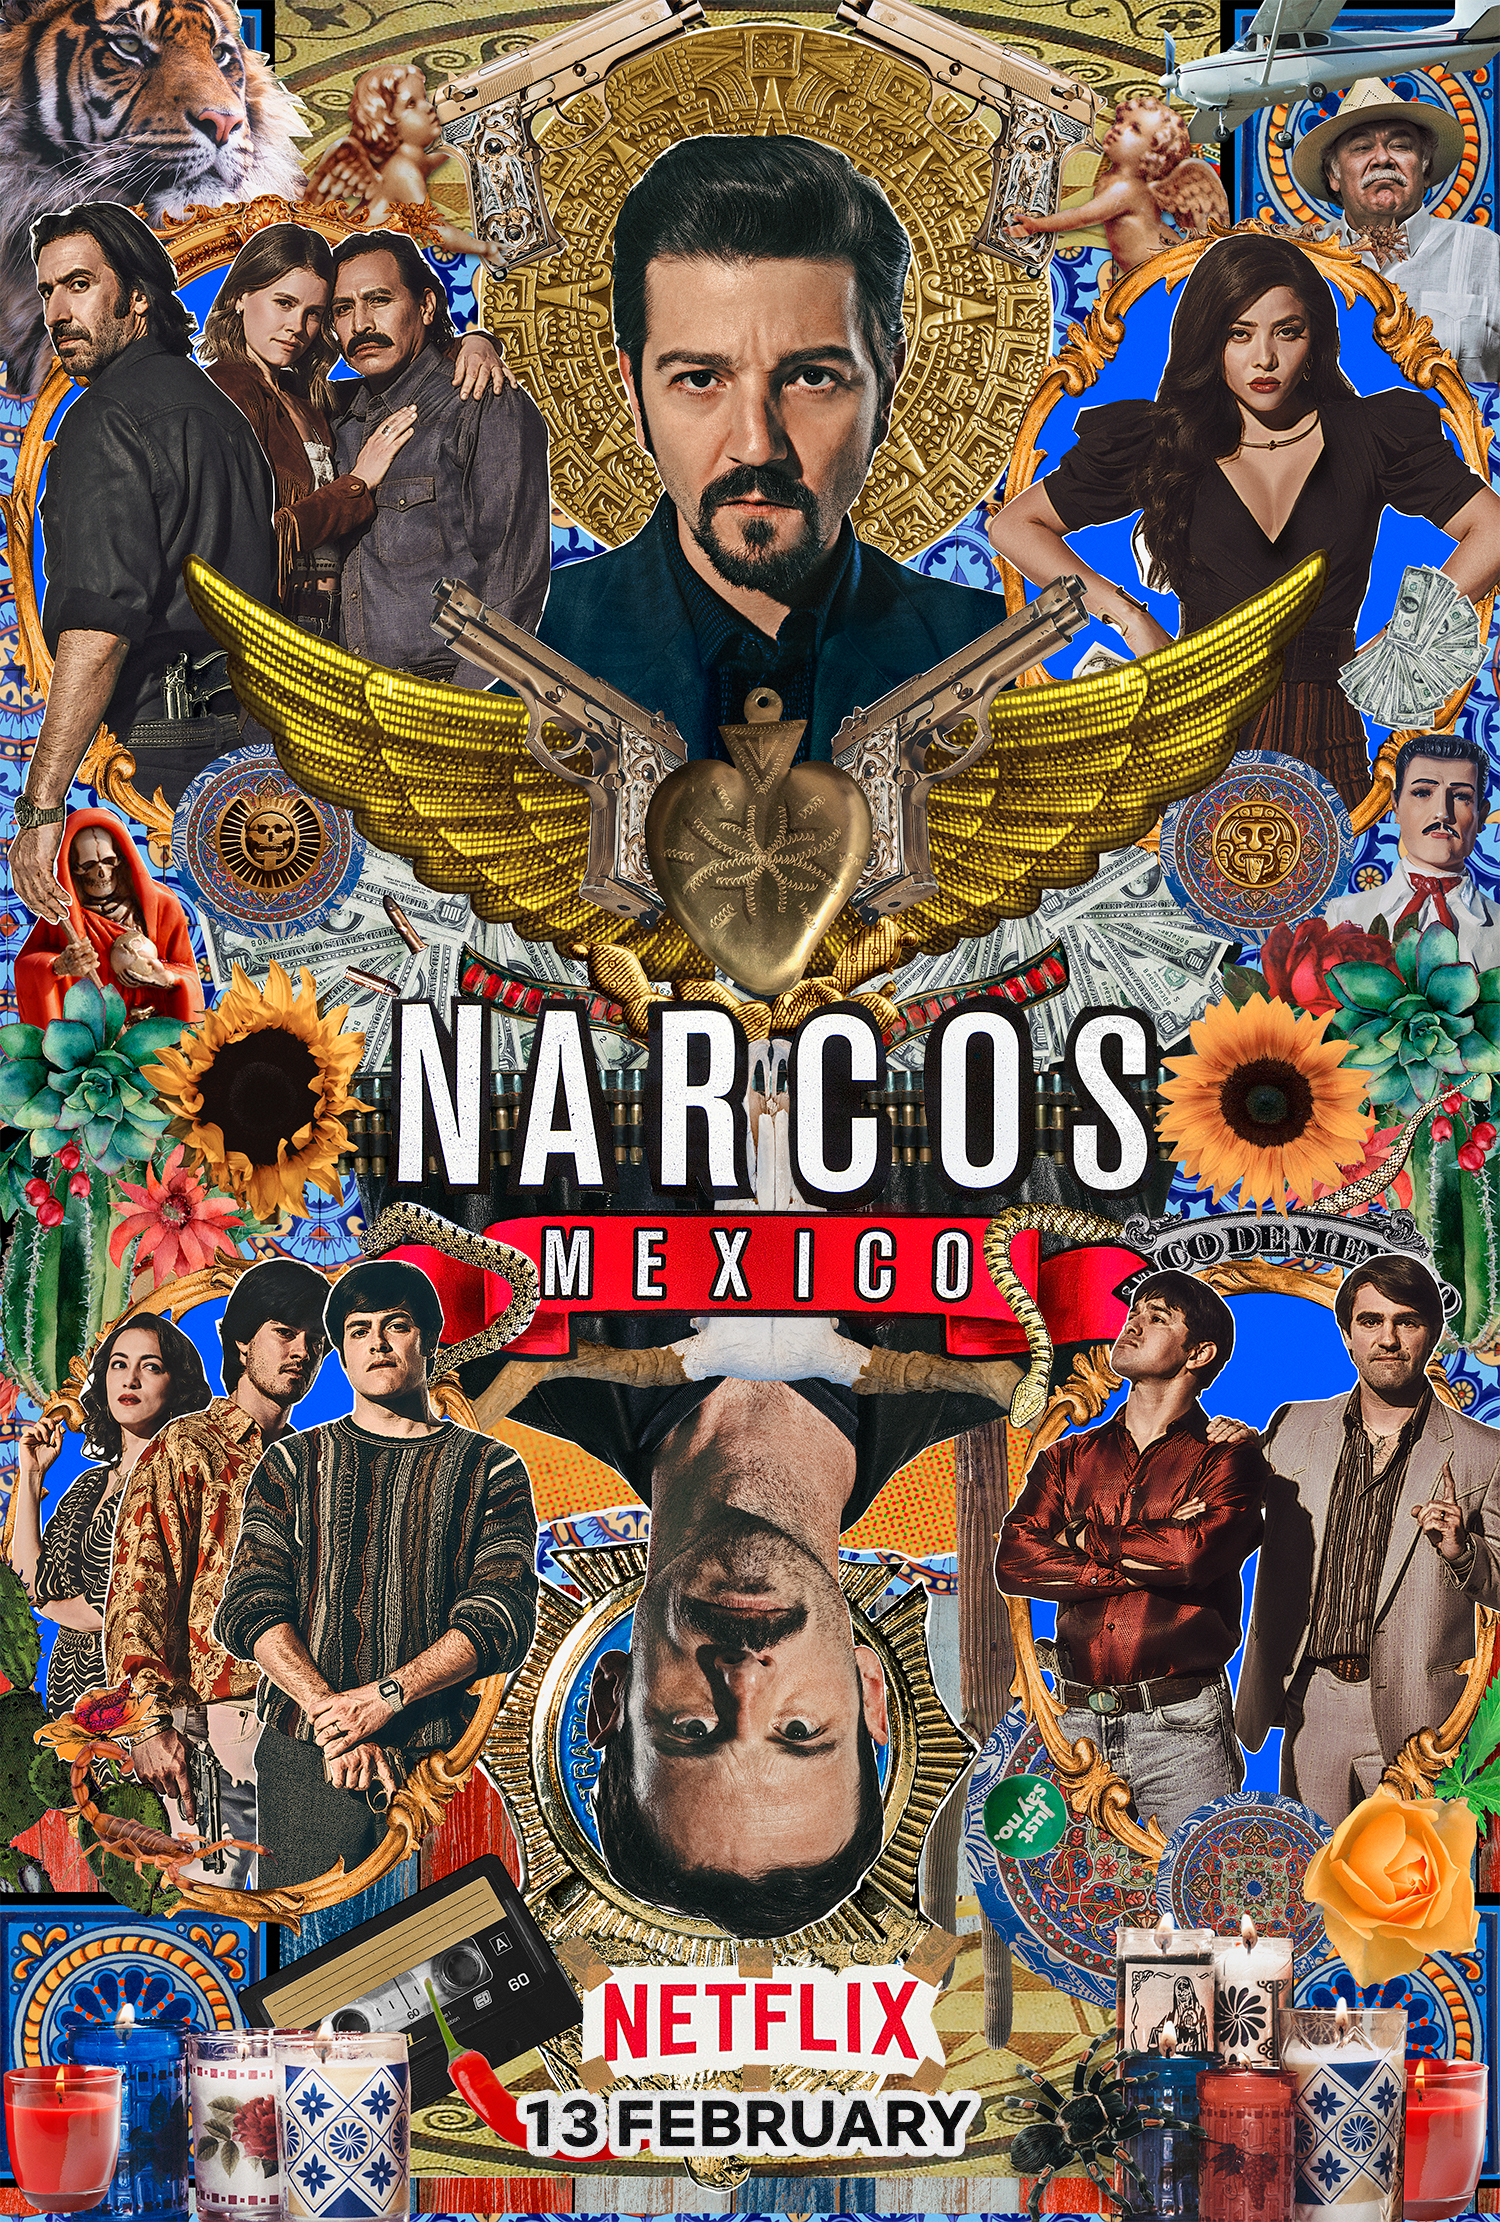 Stiahni si Seriál Narcos: Mexiko / Narcos: Mexico S01E04 (CZ)[WebRip][1080p] = CSFD 86%